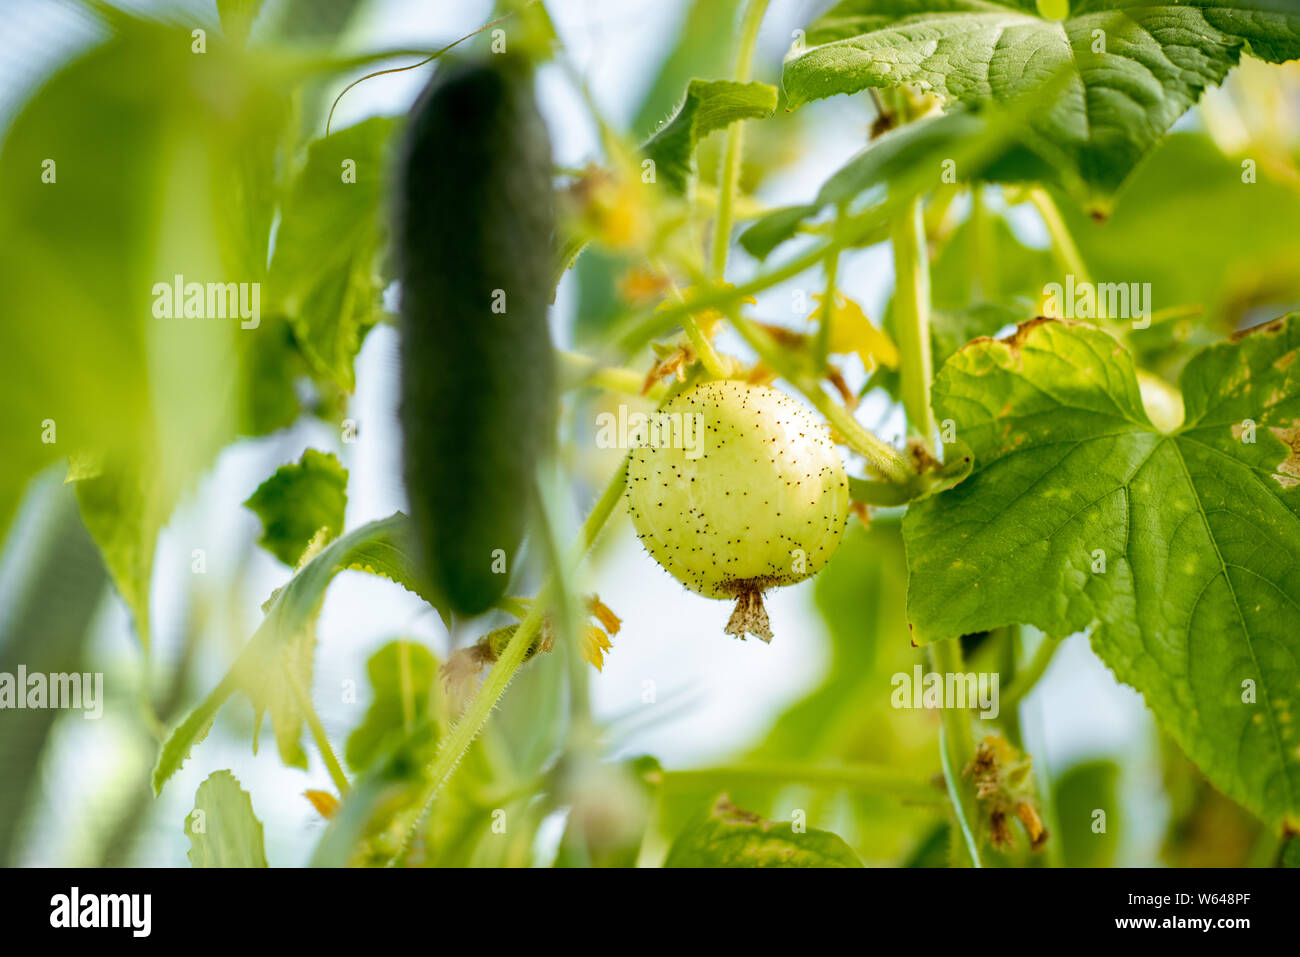 Lemon cucumber growing on the organic farm, close-up view Stock Photo